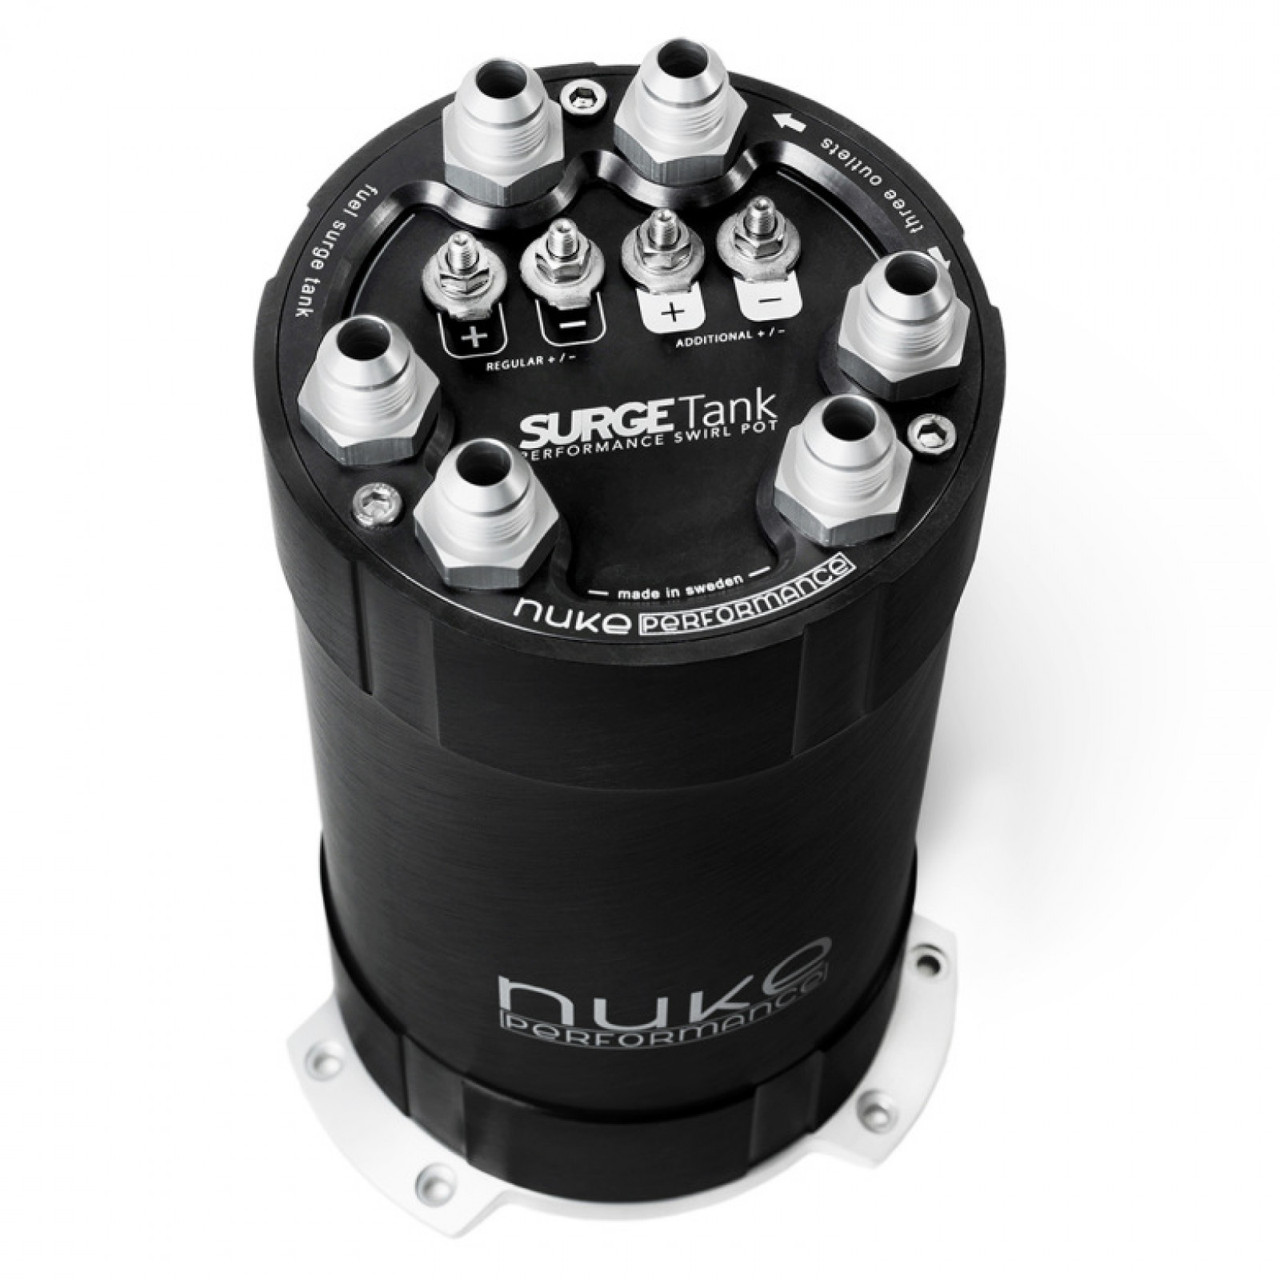 Nuke Performance 2G Fuel Surge Tank 3.0 Liter Up To 3 Internal Fuel Pumps (NUK-15001206)